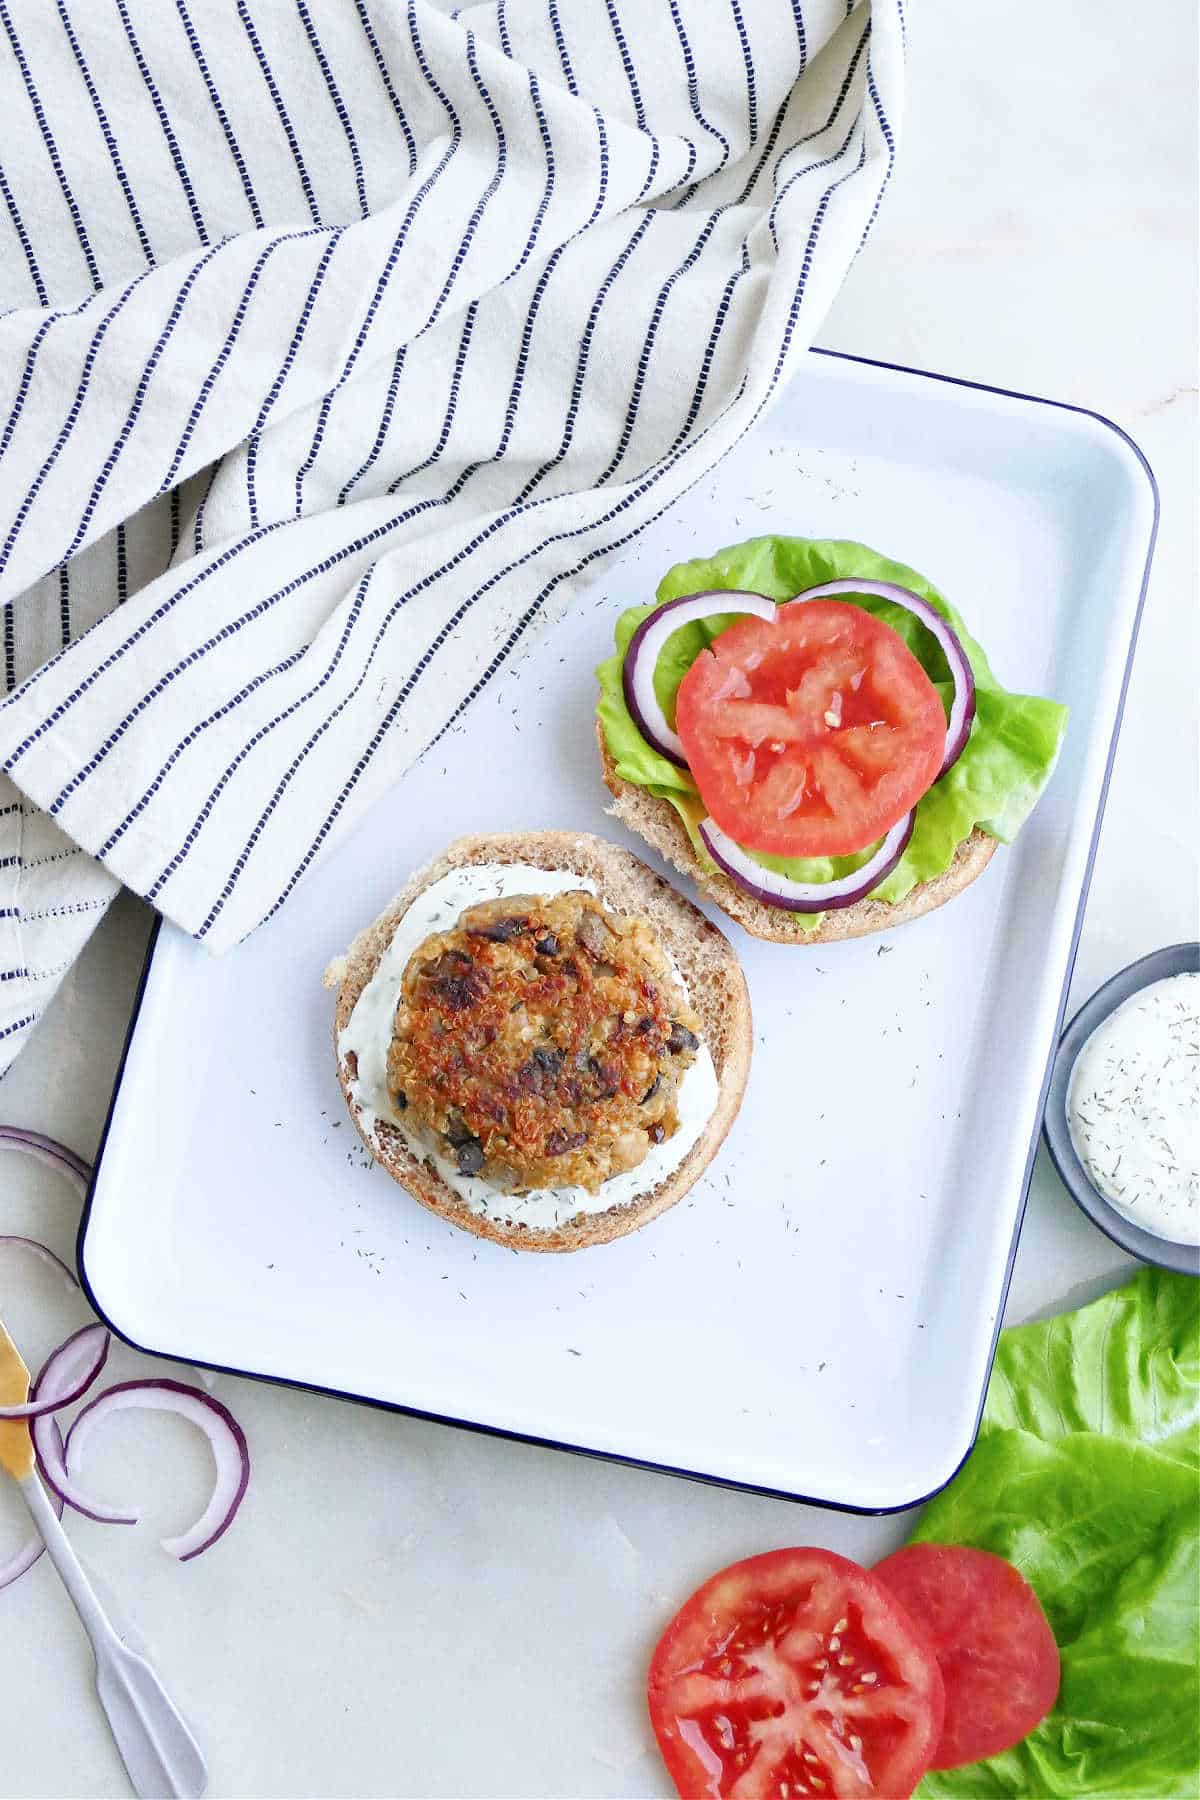 quinoa mushroom burger on a bun next to bun with lettuce and tomato